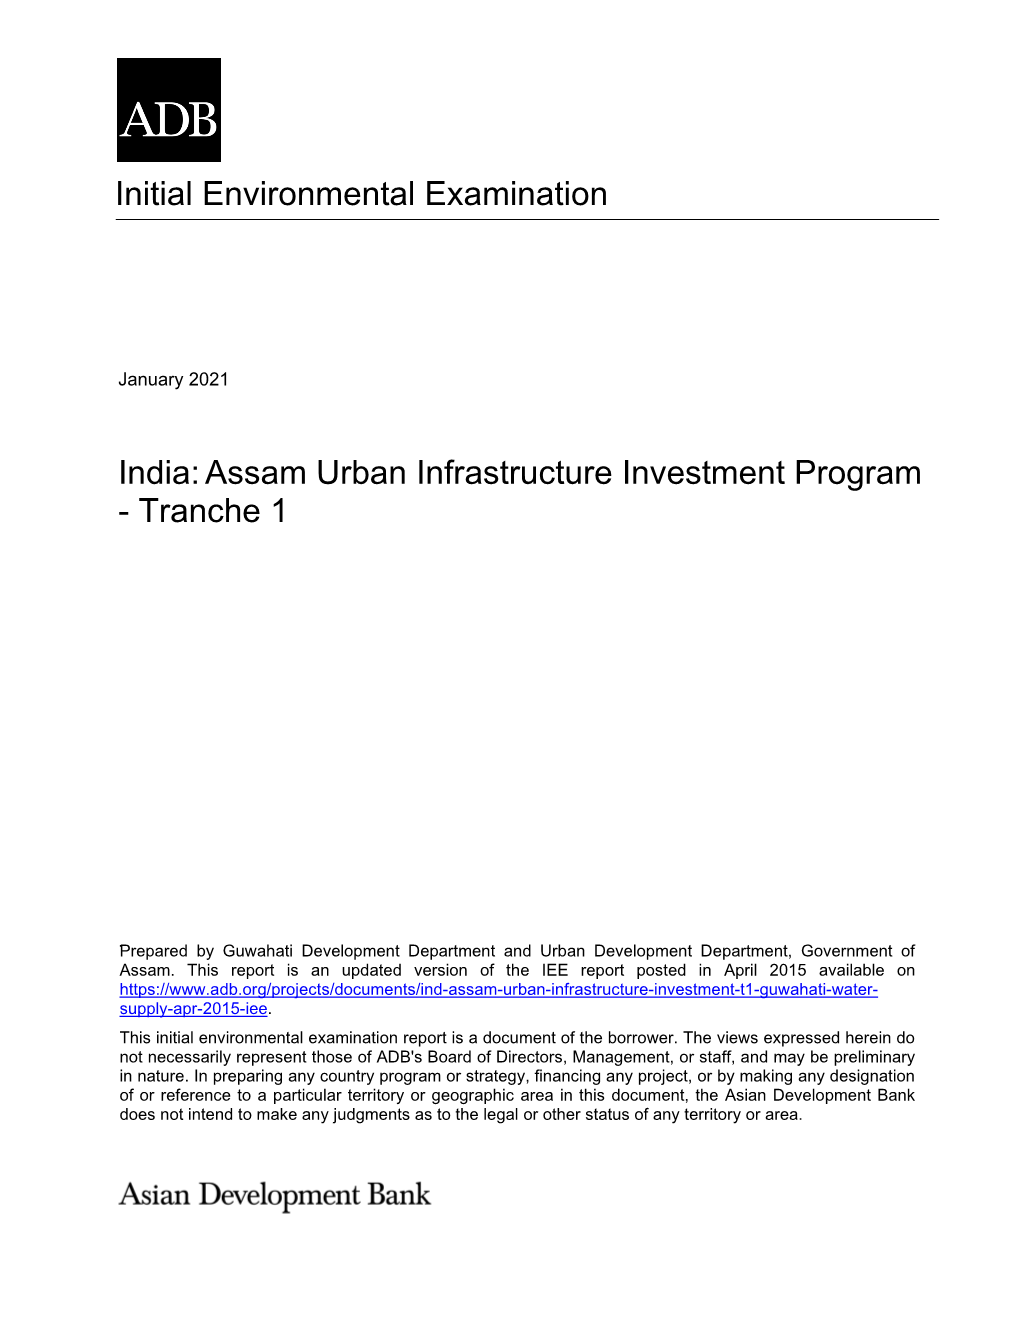 42265-023: Assam Urban Infrastructure Investment Program